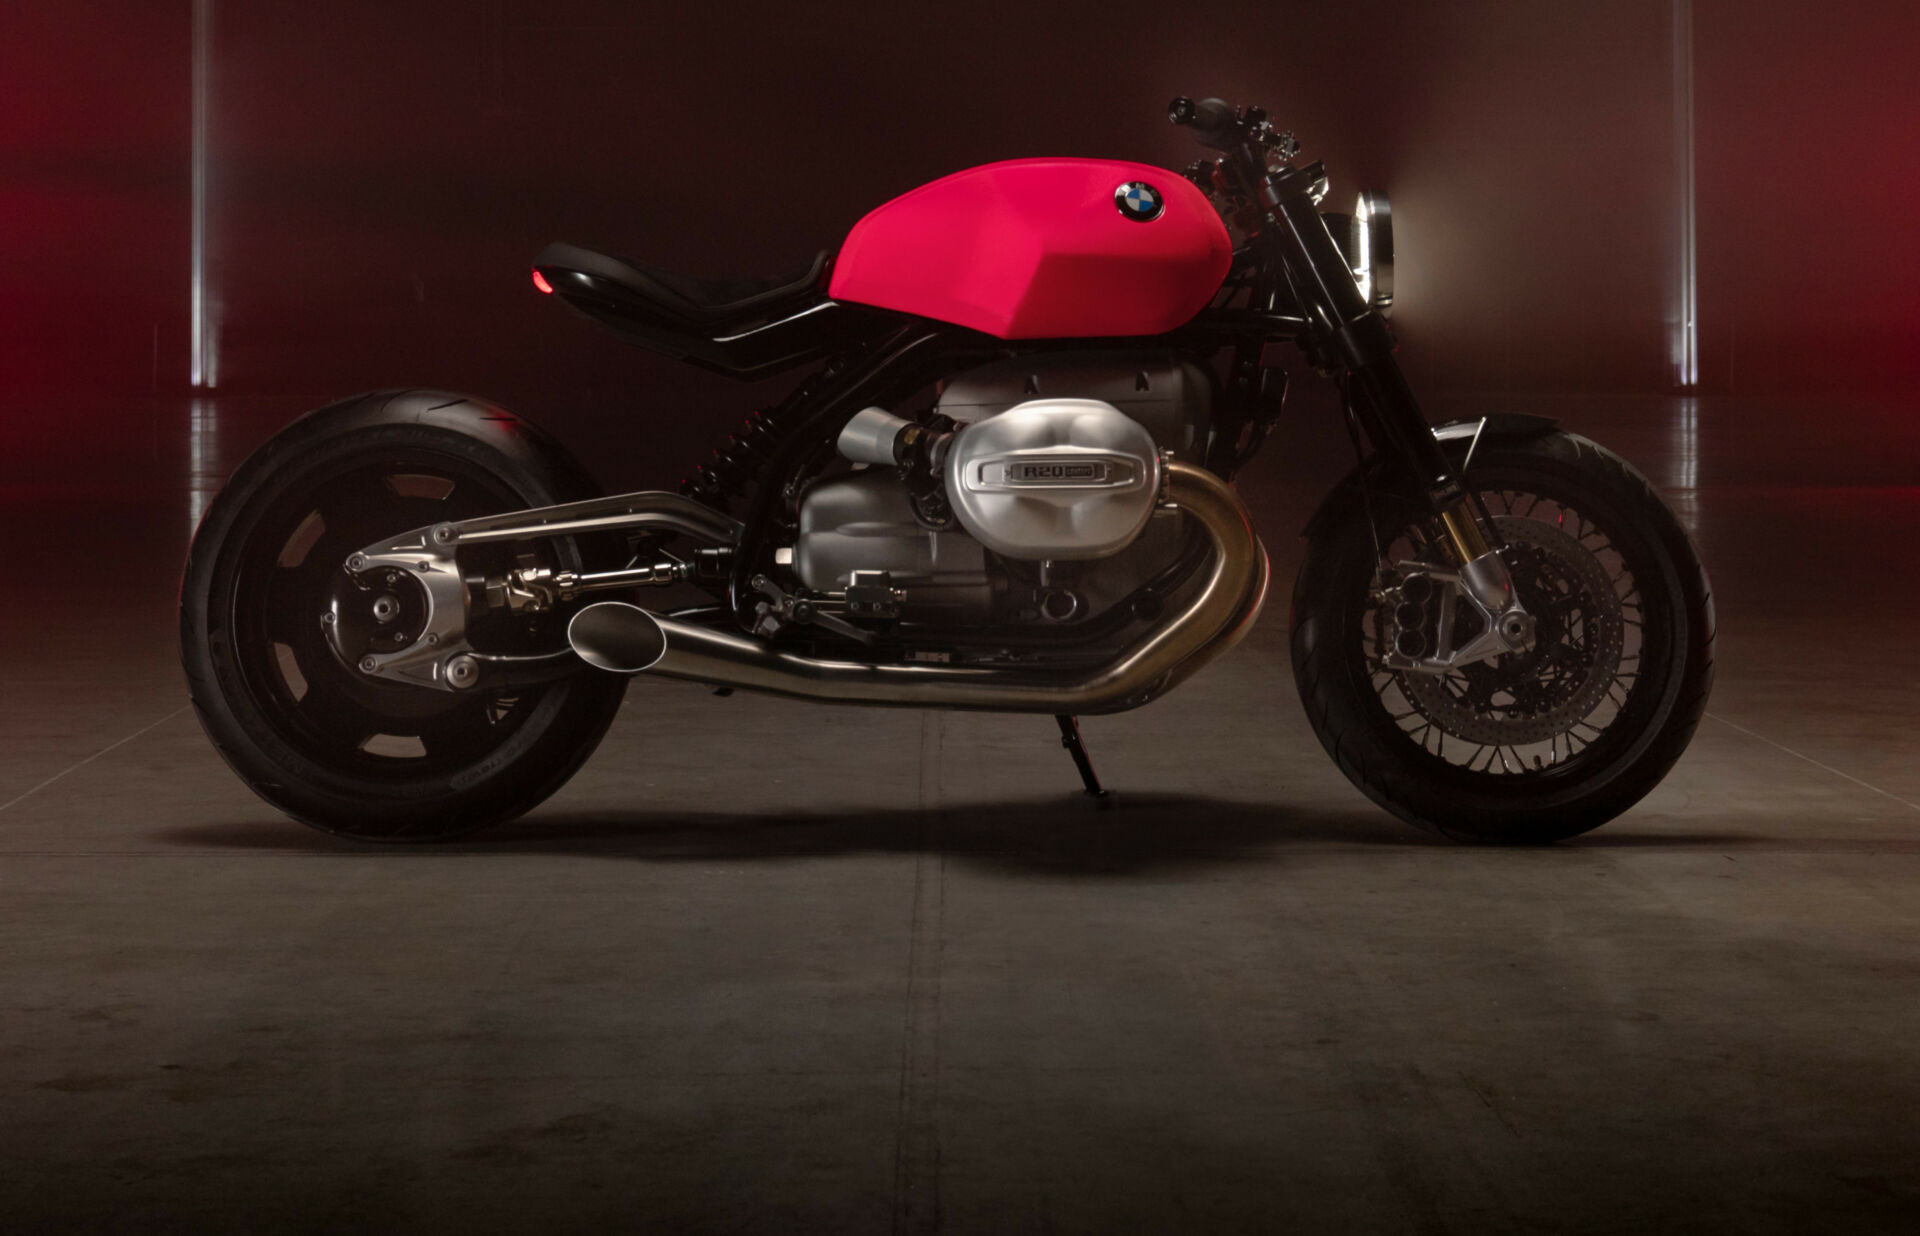 BMW's R20 concept bike. Photo courtesy BMW Motorrad.